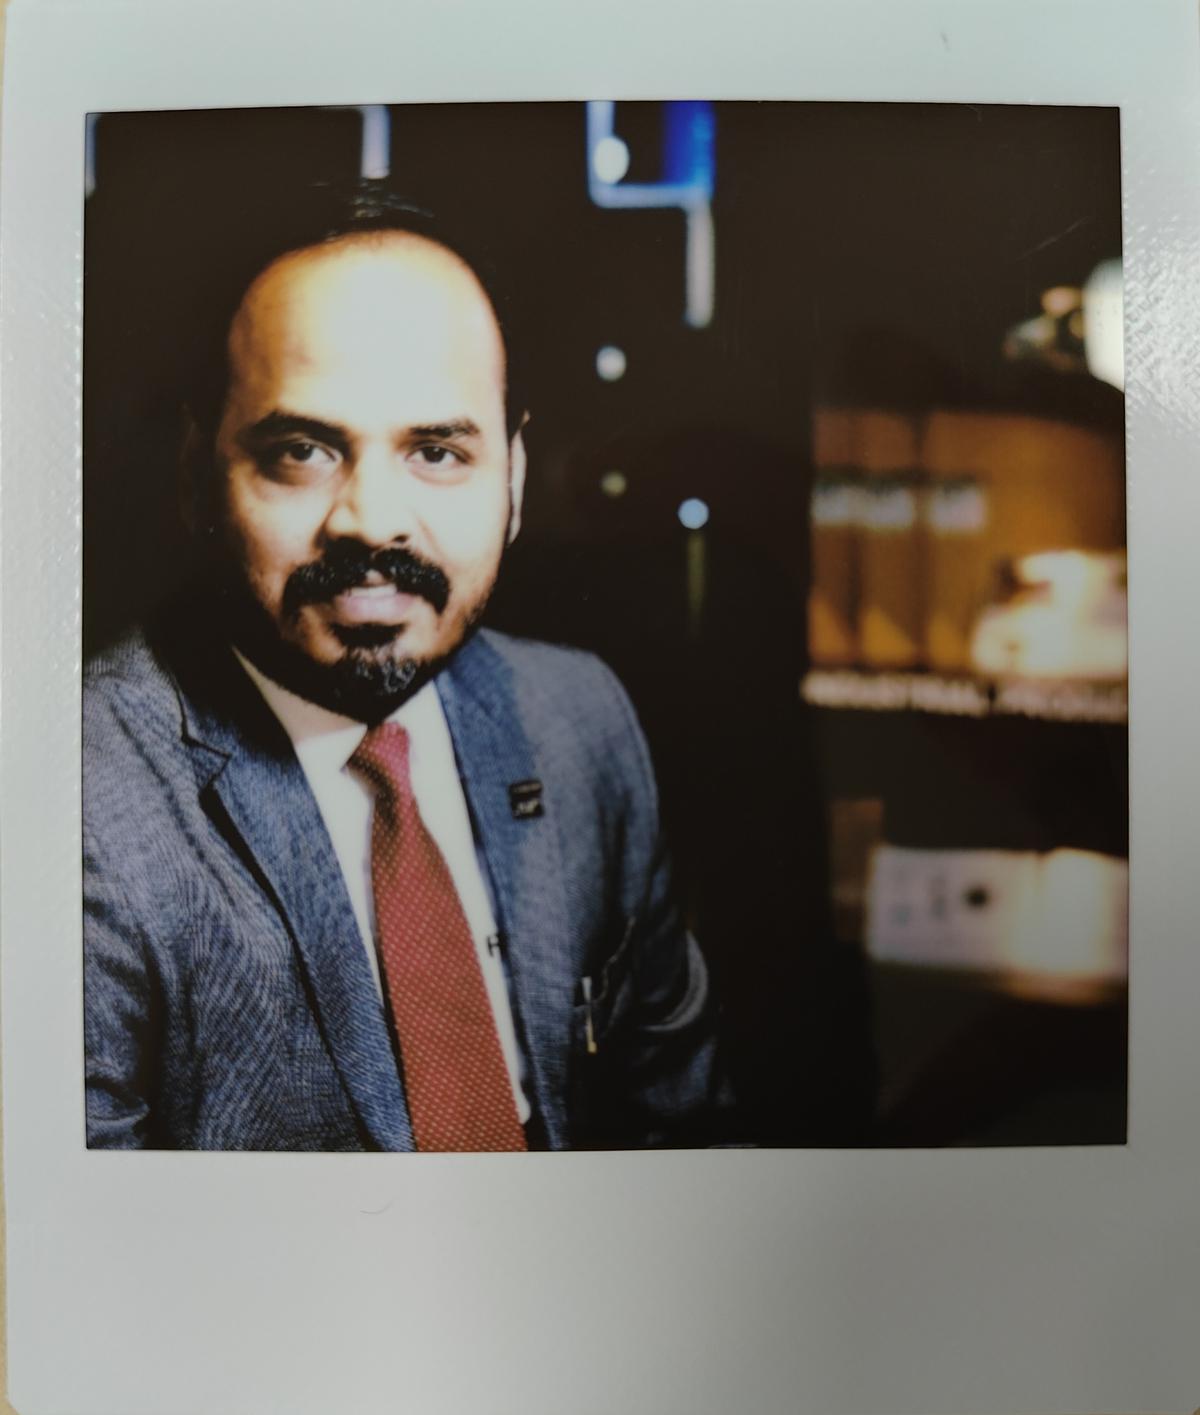 Arun Babu, associate director and head of digital camera, instax and optical devices business, Fujifilm India